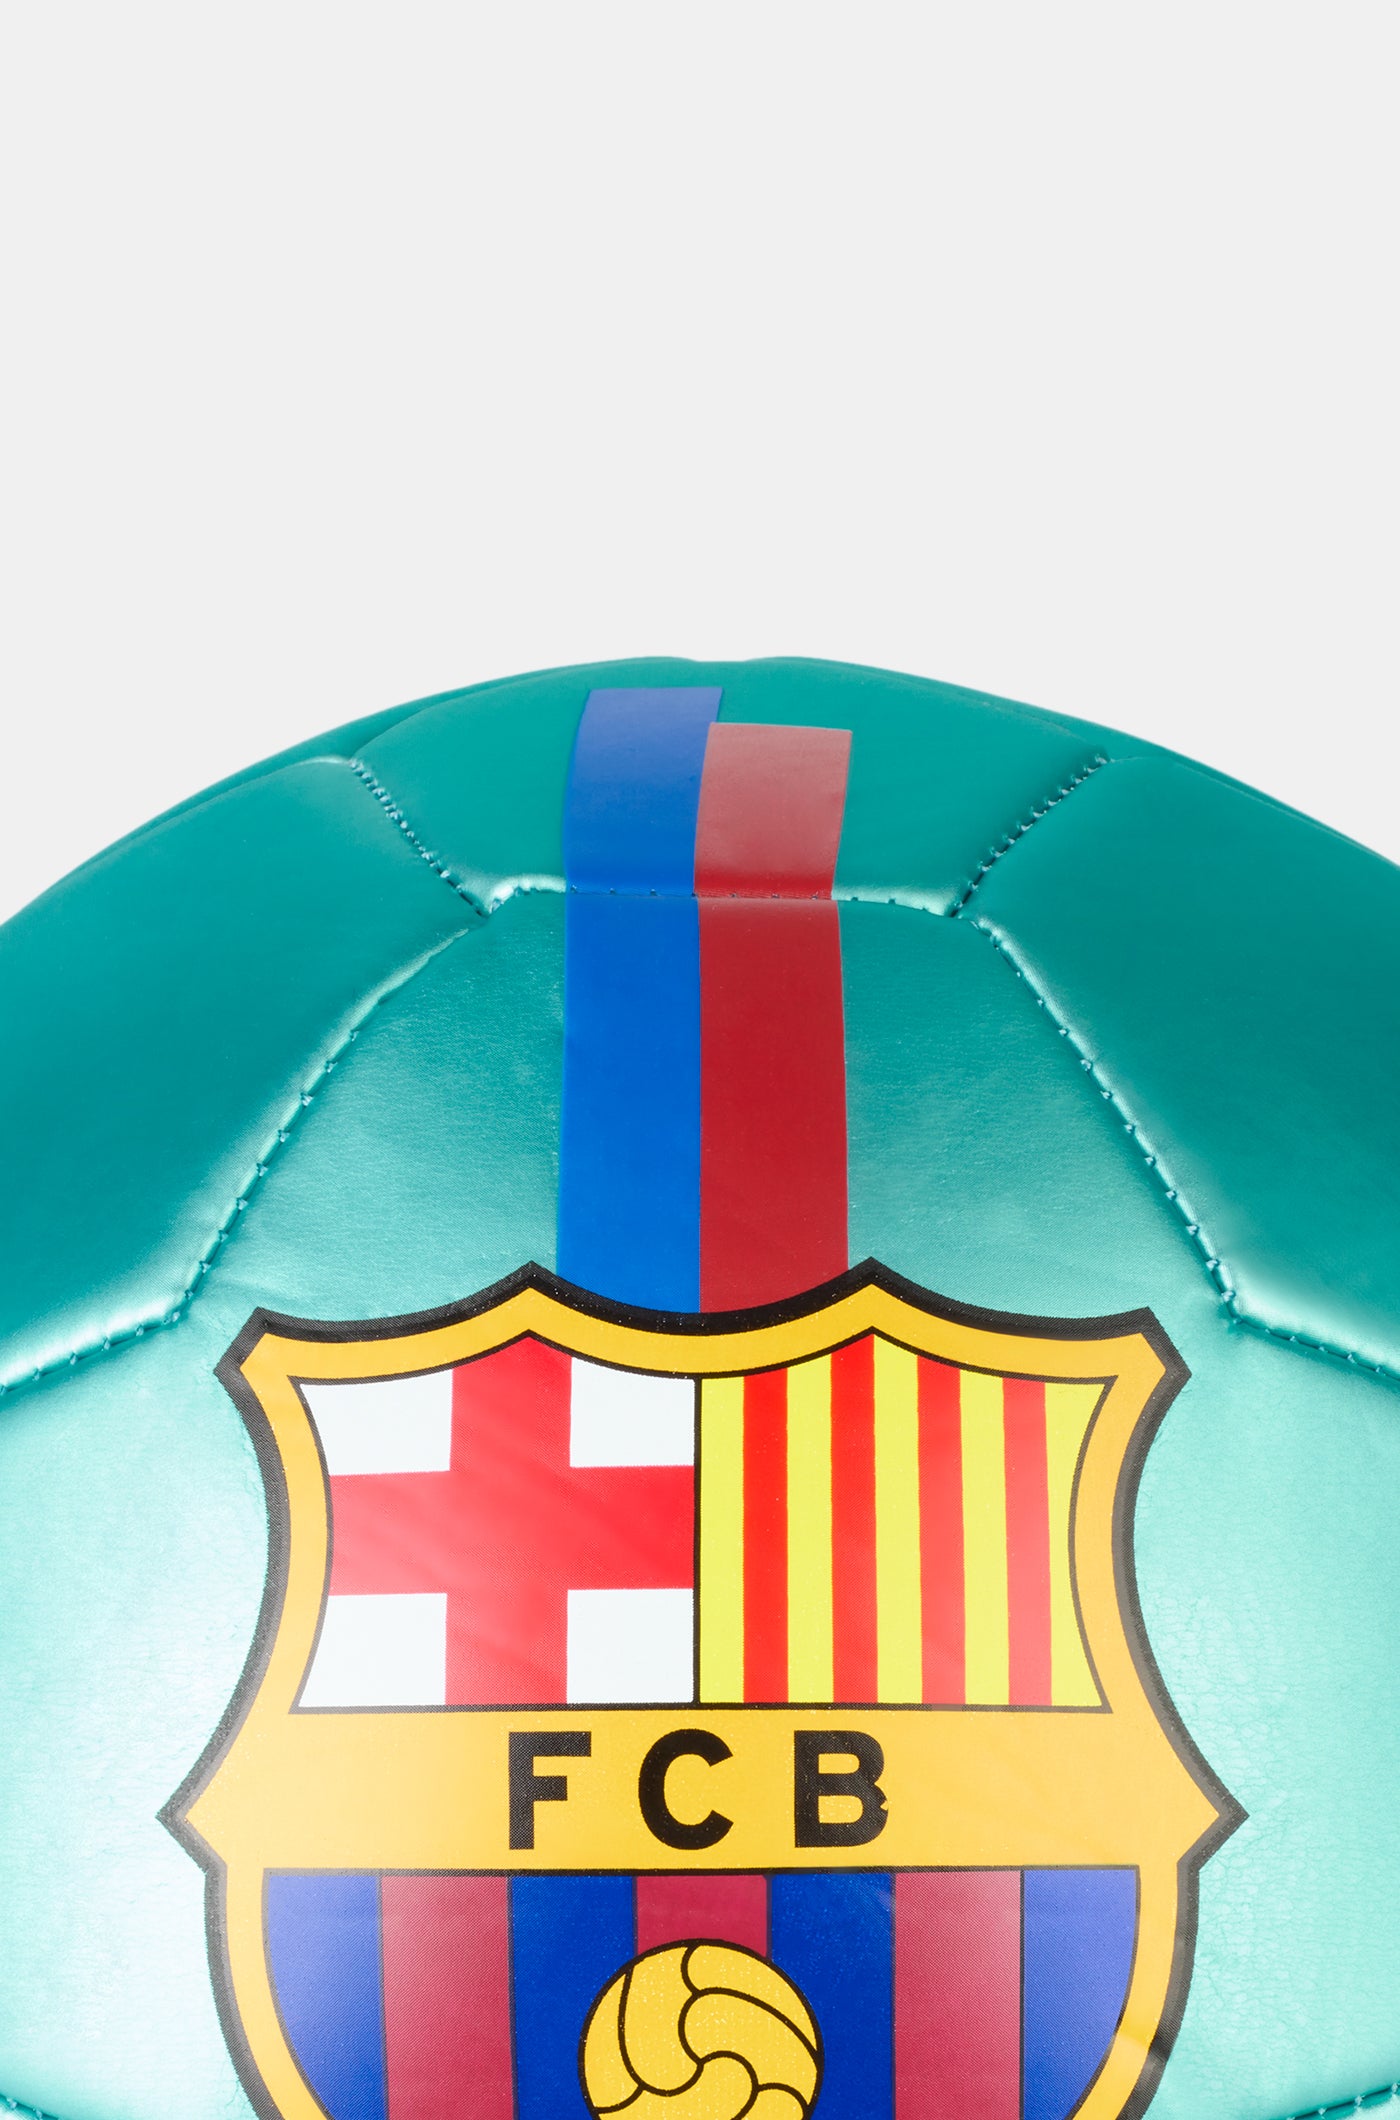 Third Kit Ball 23/24 FC Barcelona